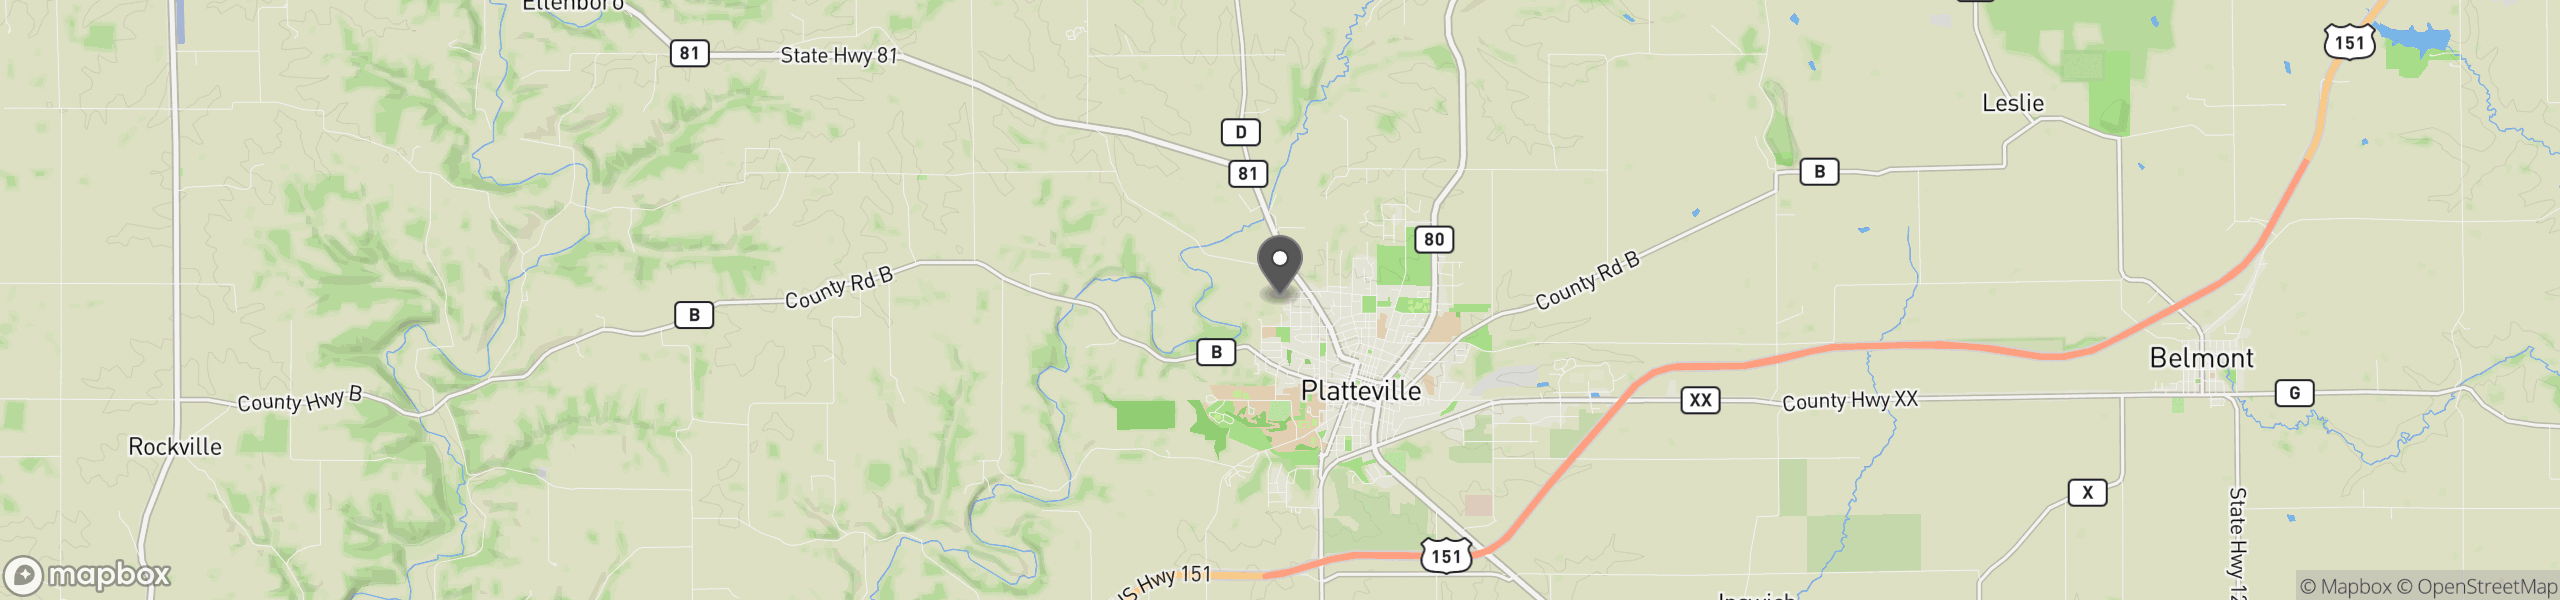 Platteville, WI 53818